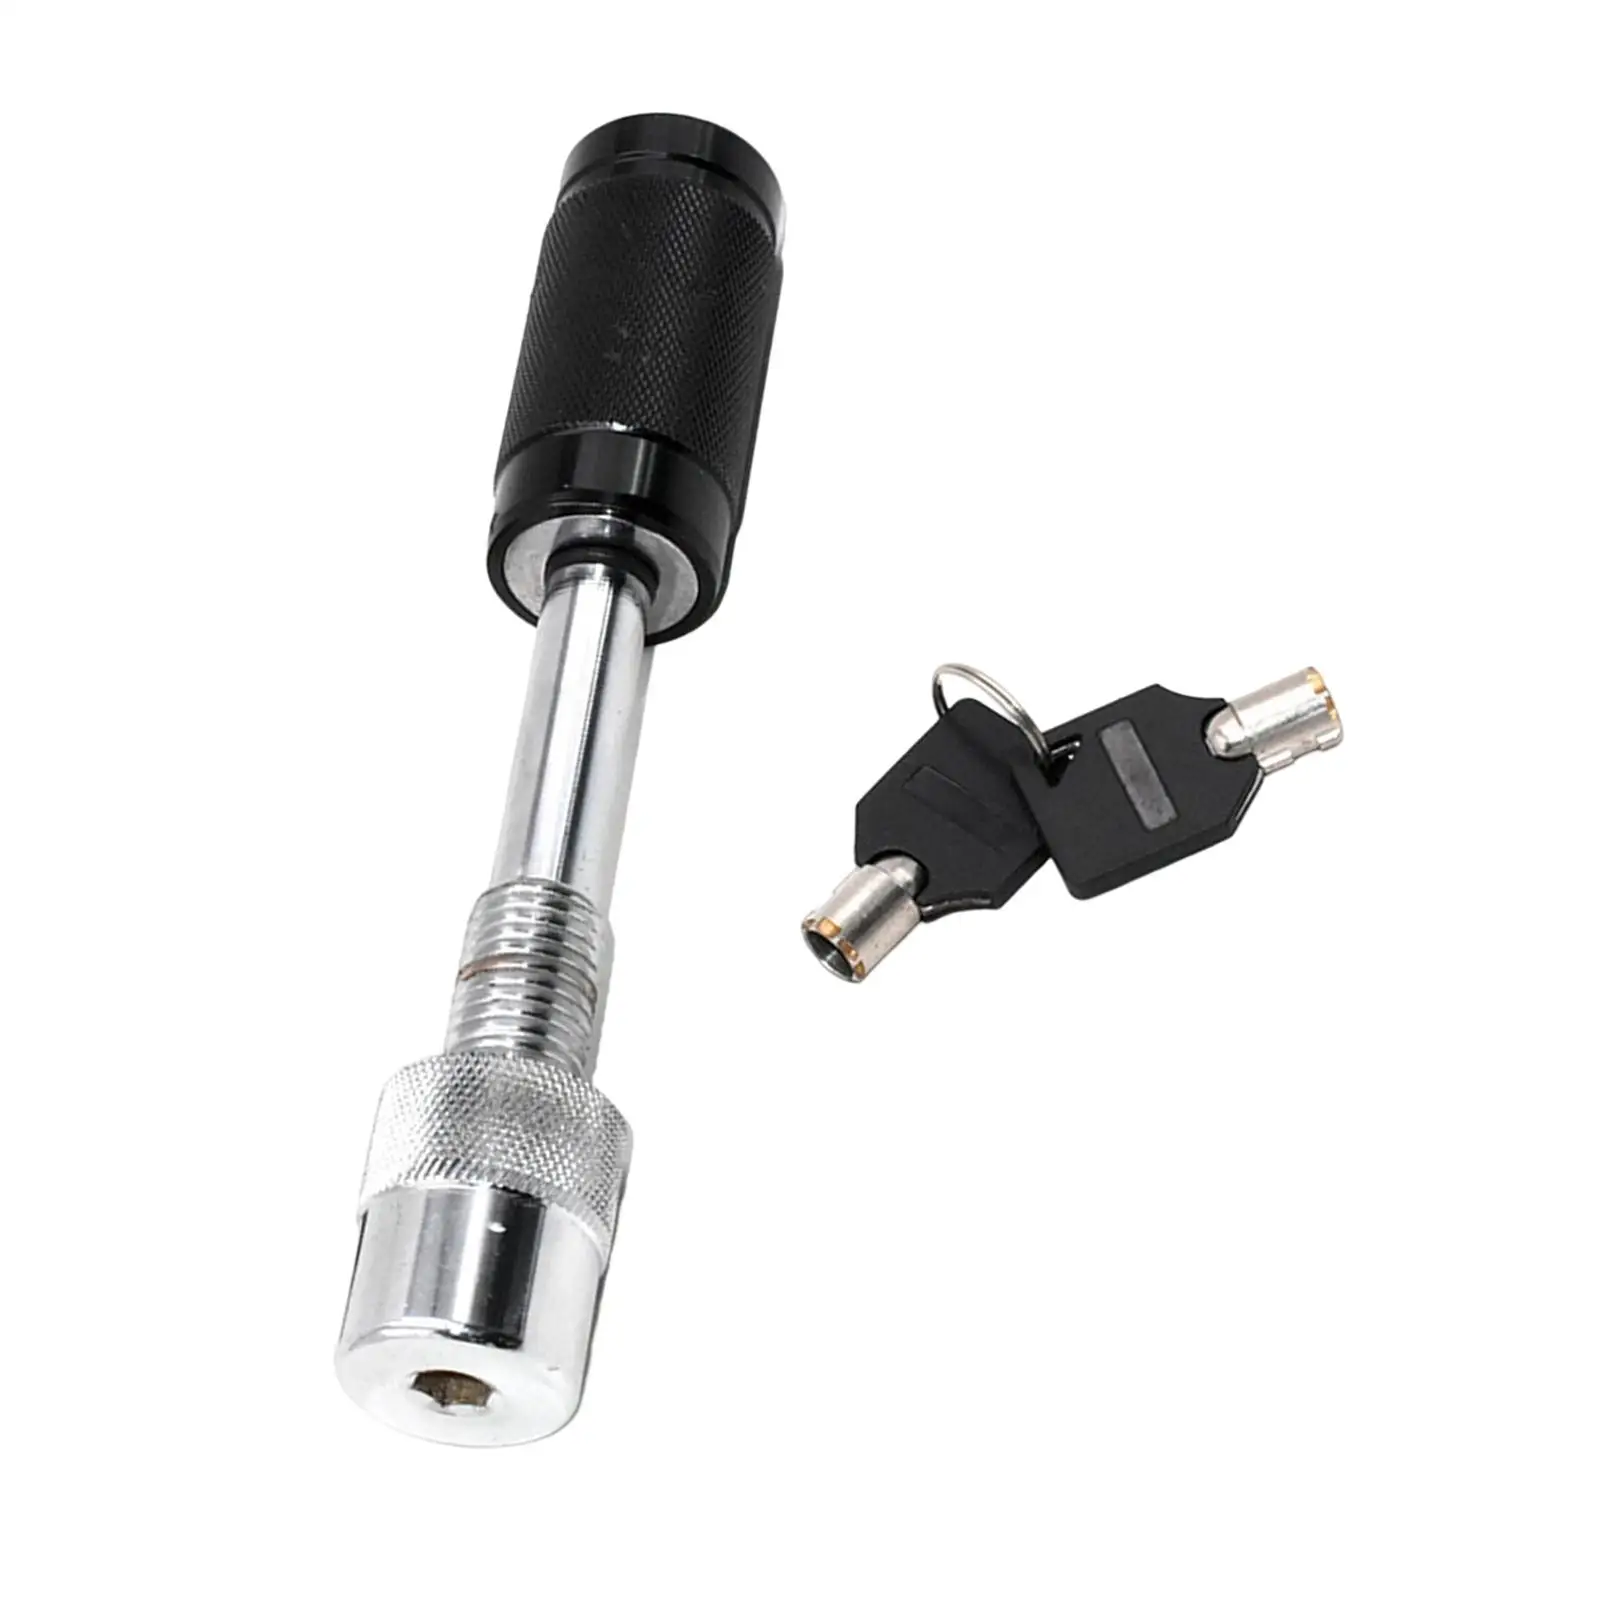 5/8 inch Trailer Hitch Lock Automotive Accessories Locking Device Receiver